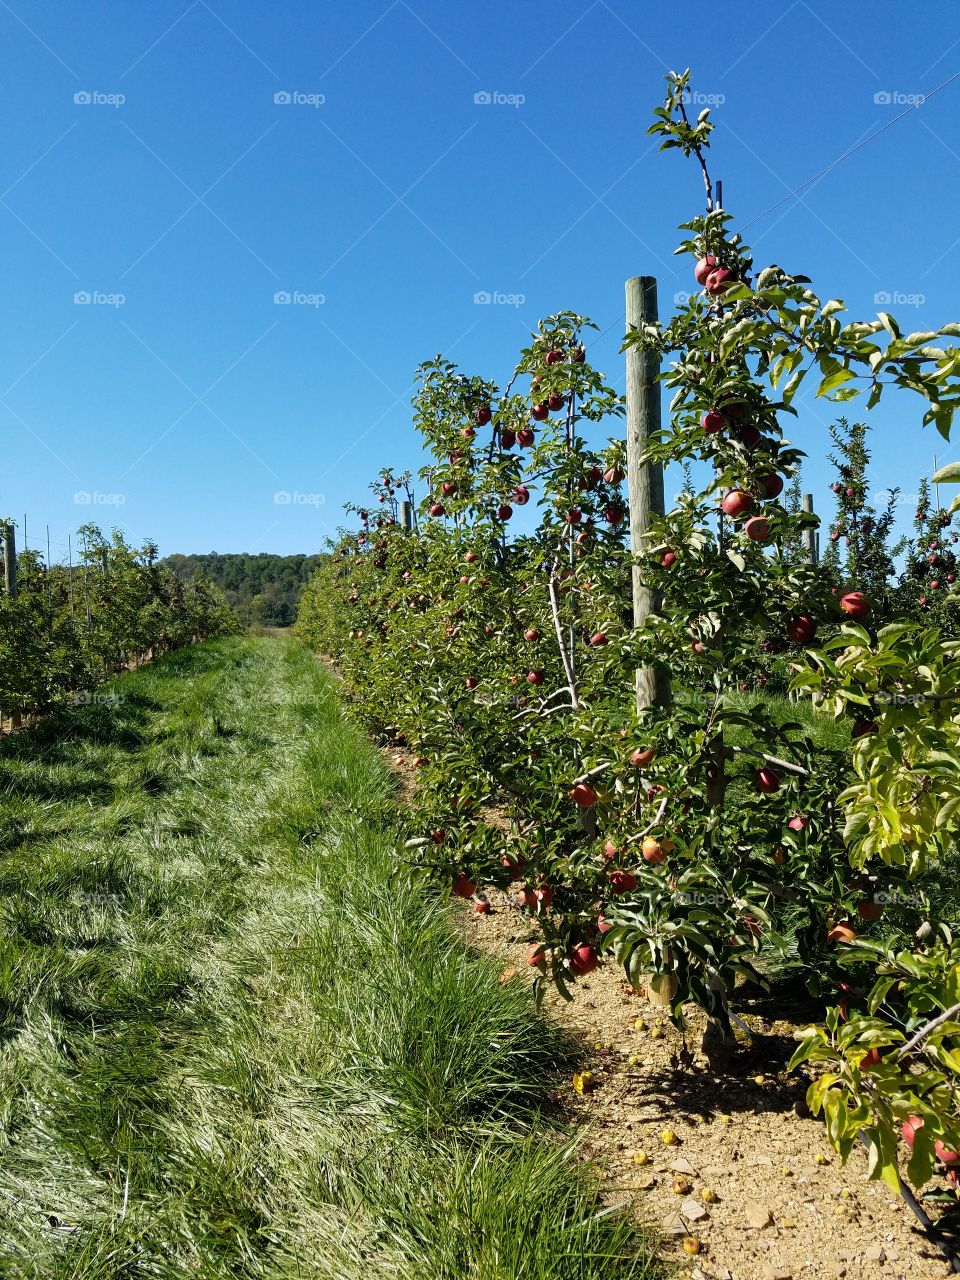 Field of Apples